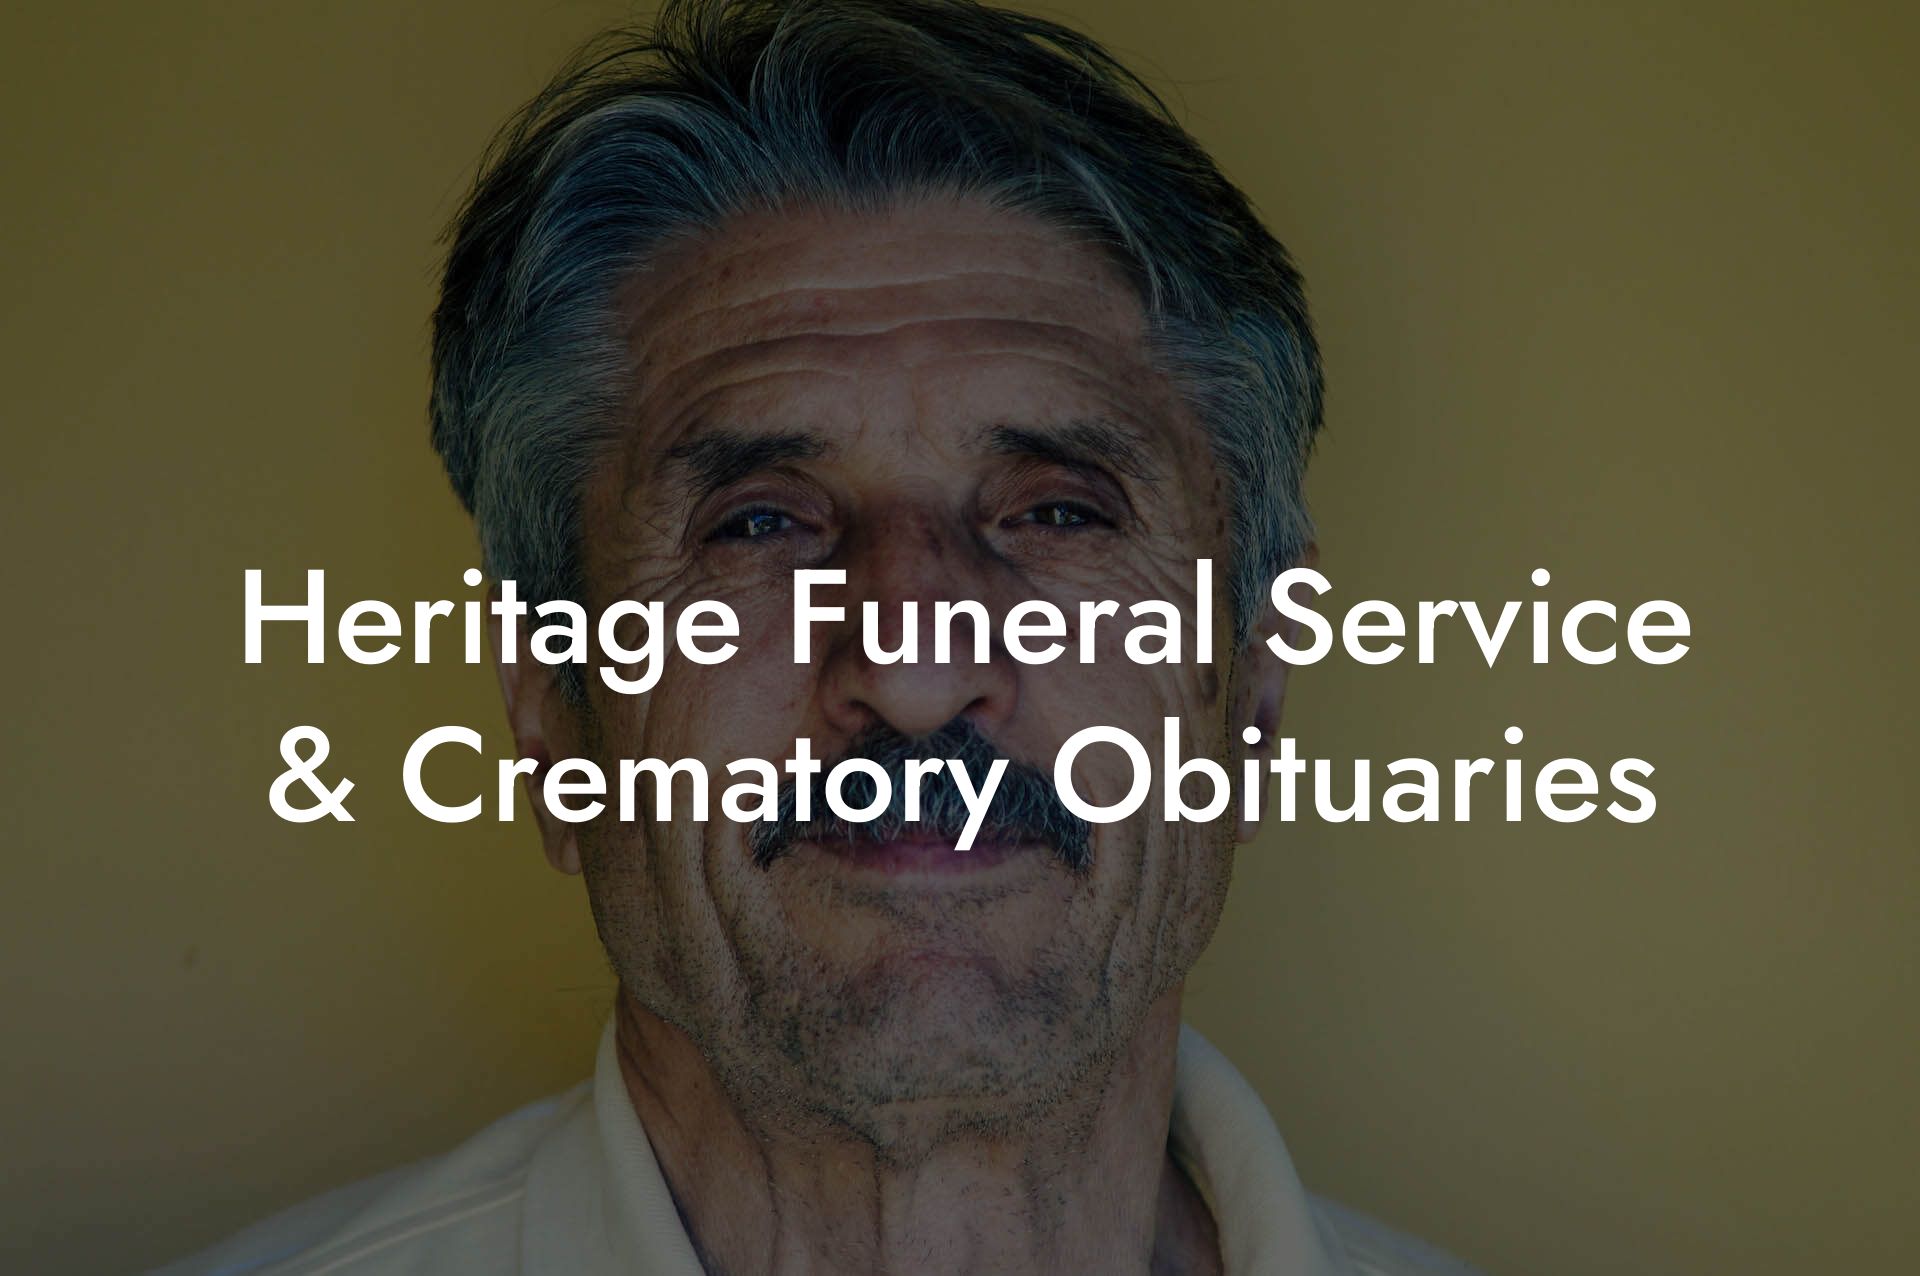 Heritage Funeral Service & Crematory Obituaries